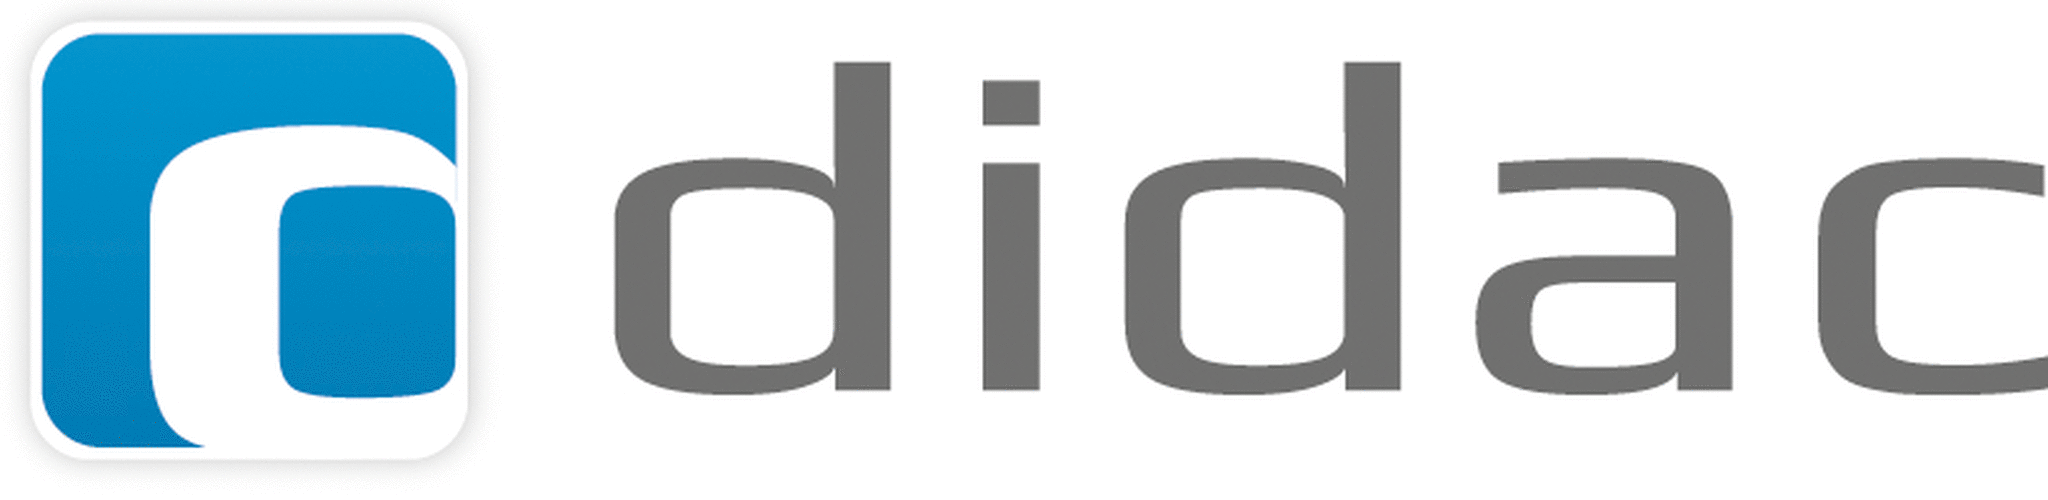 Didac logo